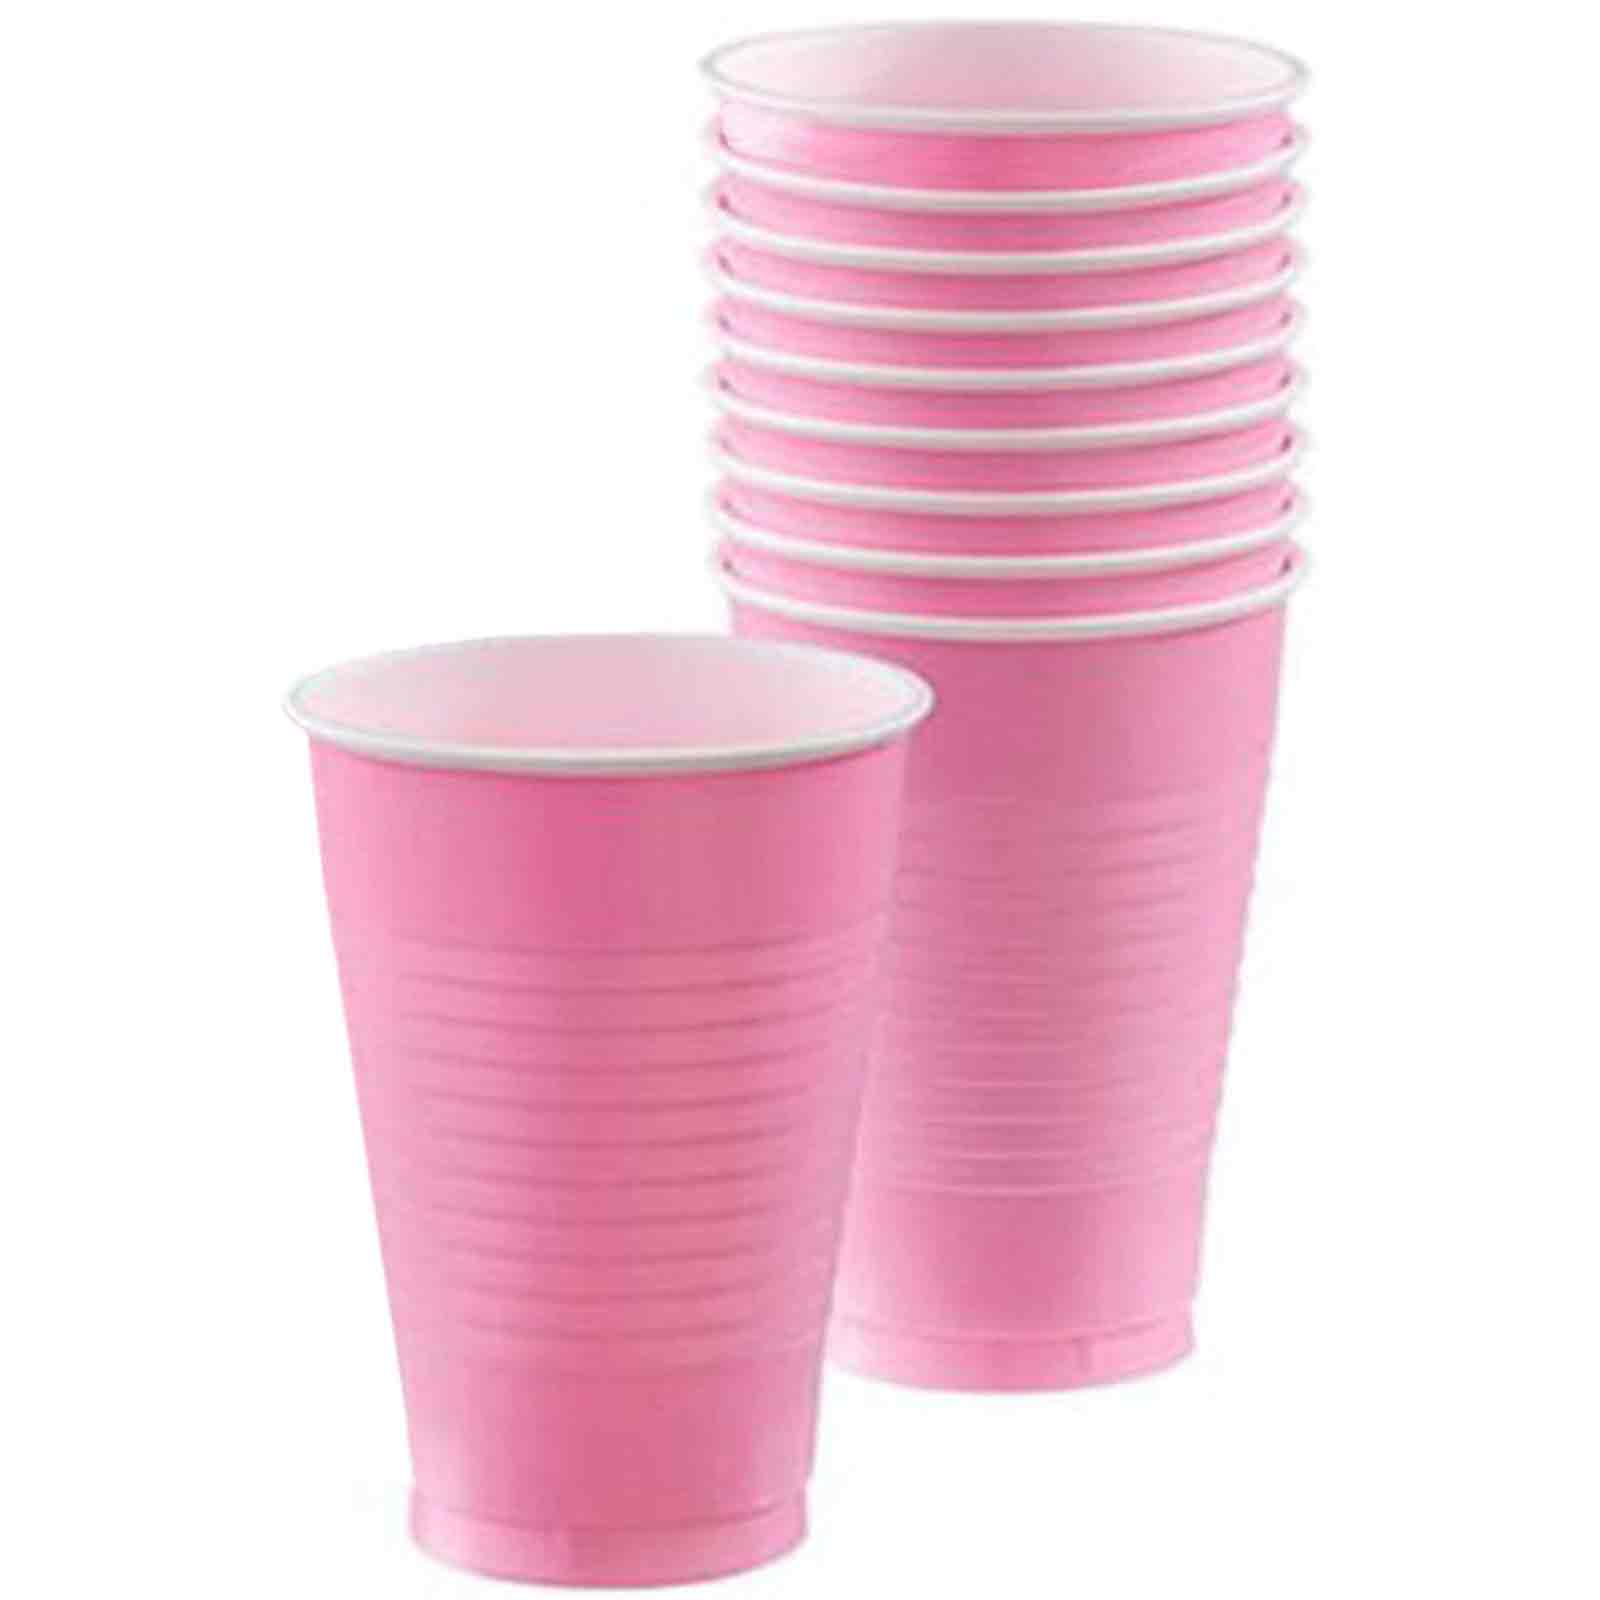 New Pink Plastic Cups 18oz, 20pcs